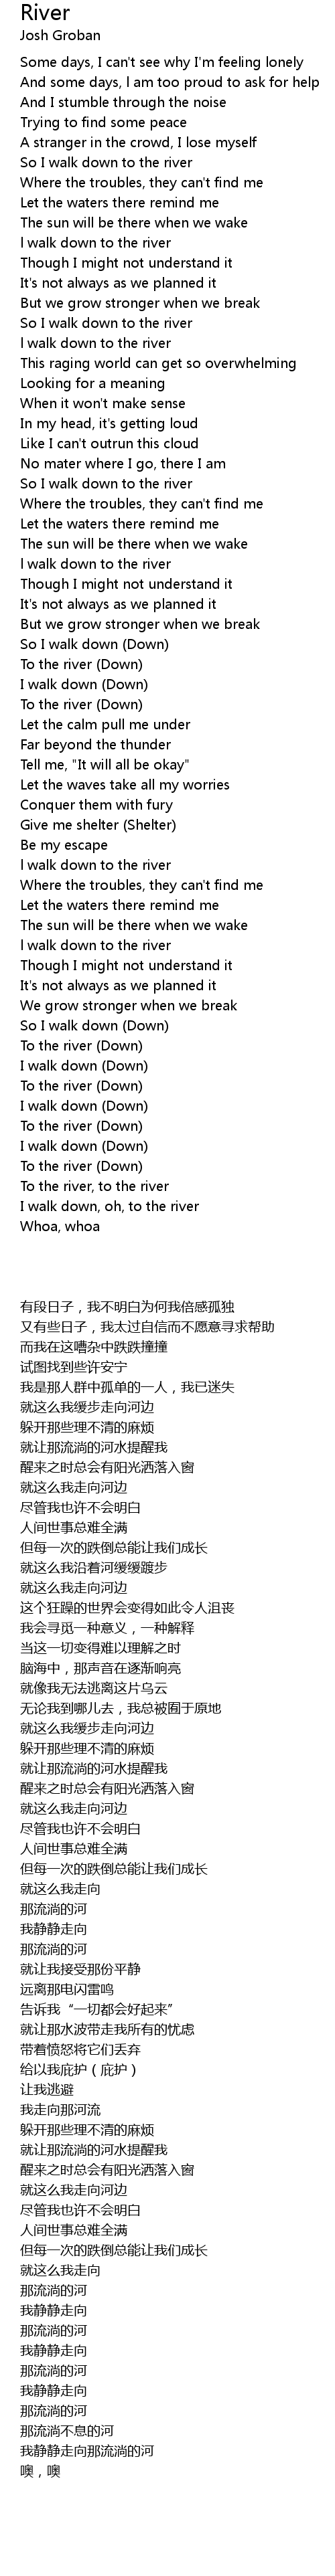 River Lyrics Follow Lyrics